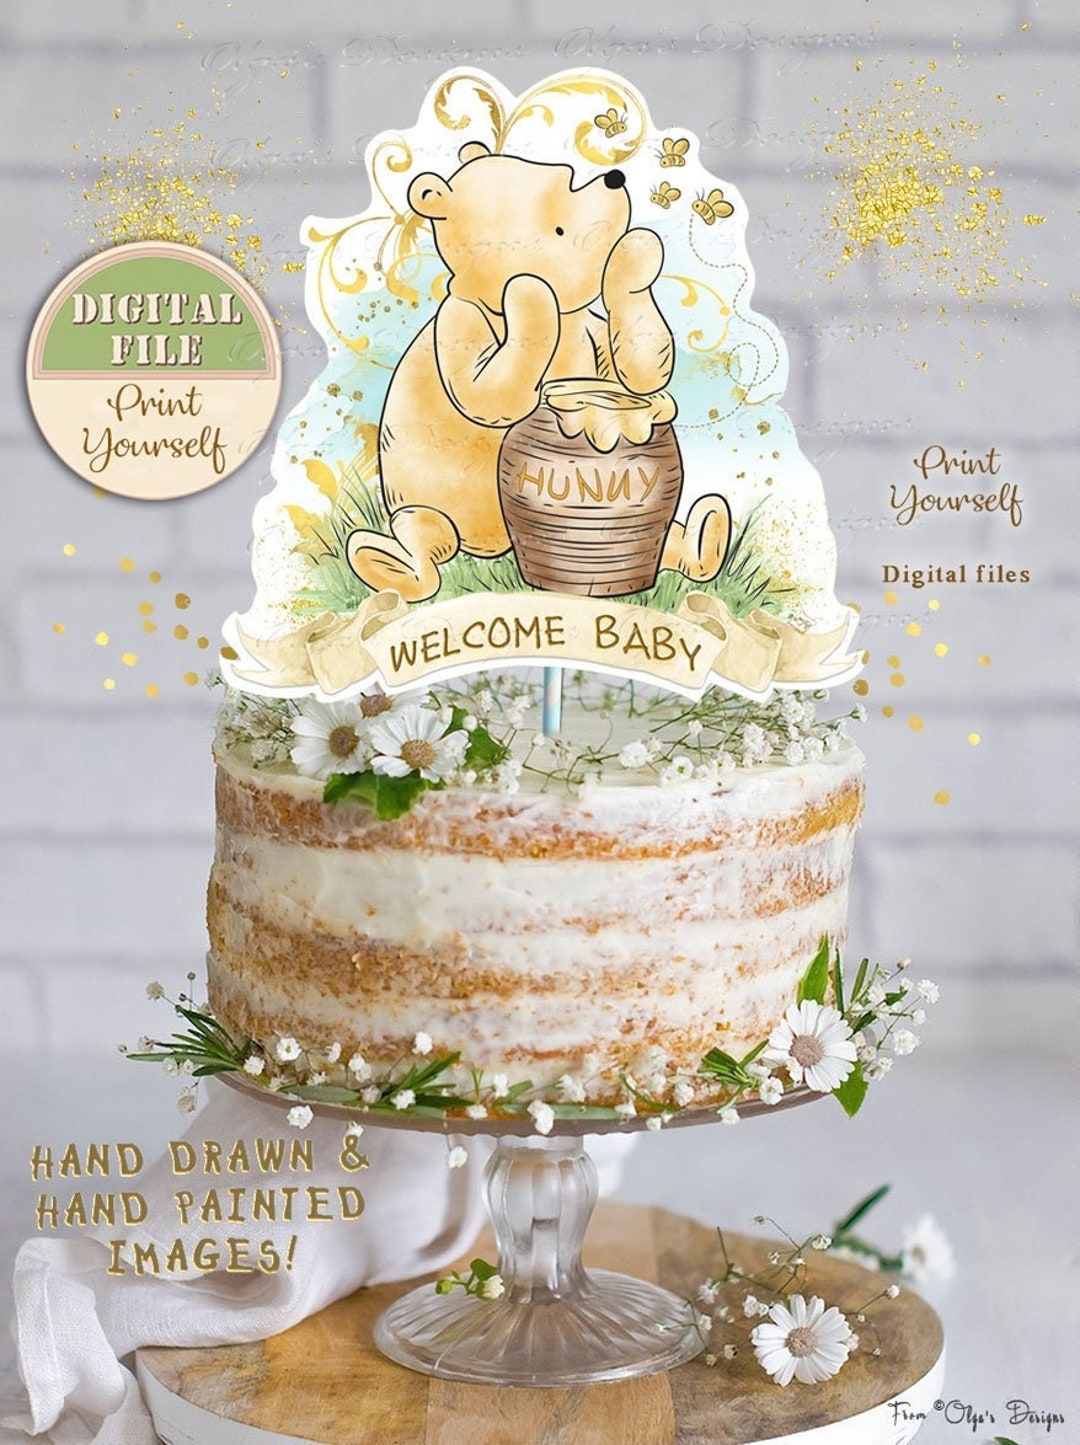 24pcs/pack Cartoon Winnie The Pooh Theme Cake Decorations Baby